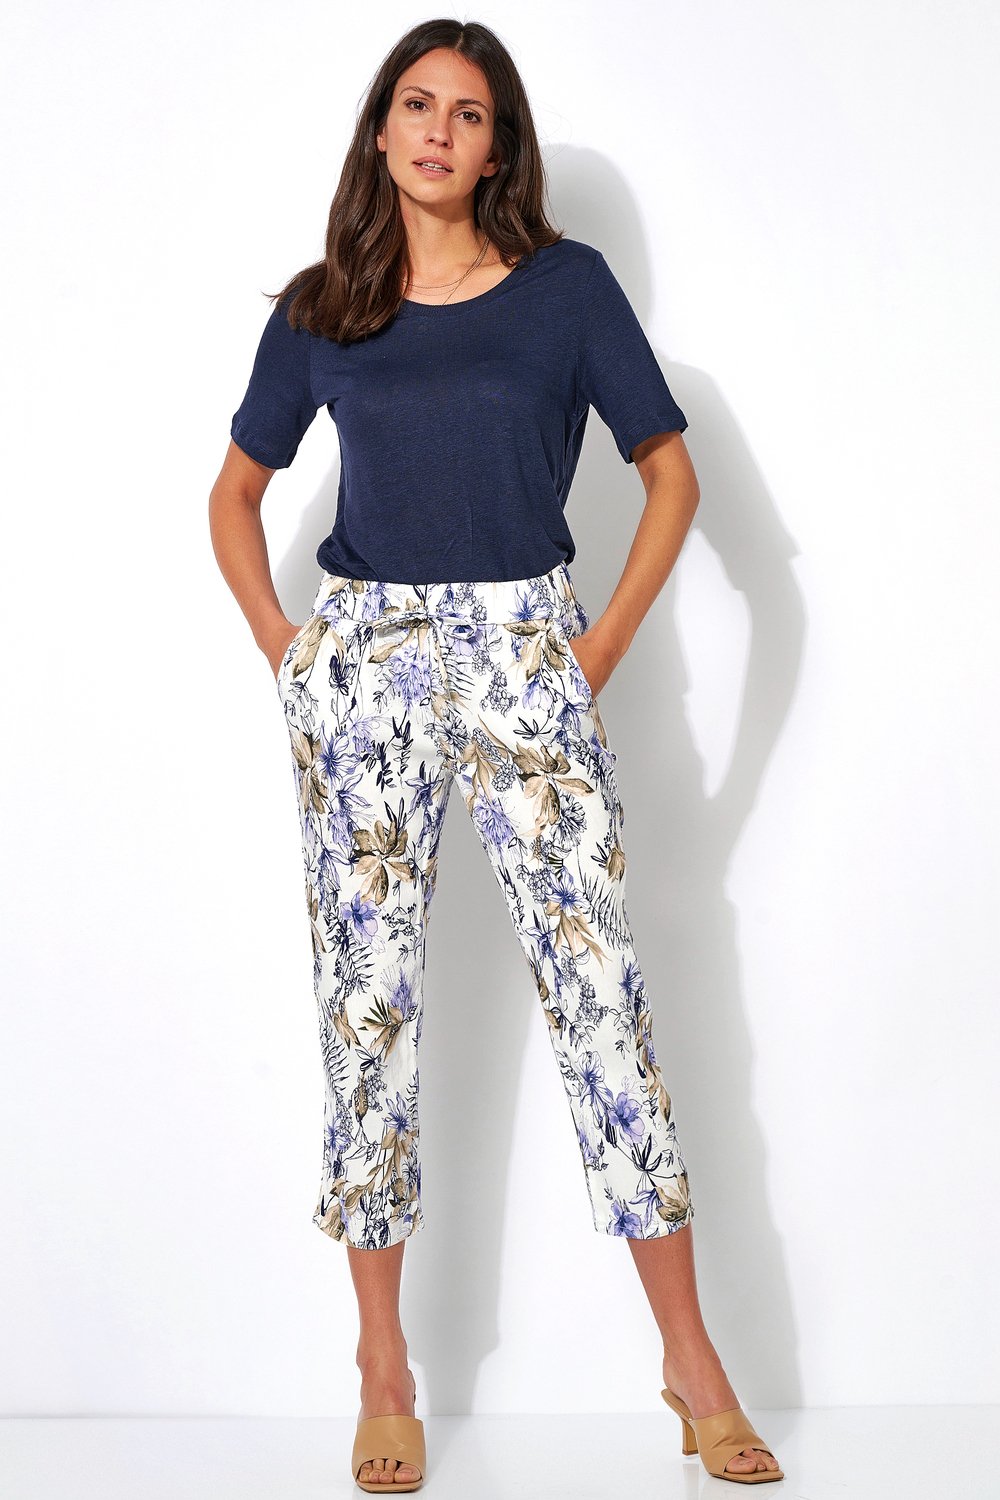 Colourful printed linen pants | Style »Pia« multicolour blue